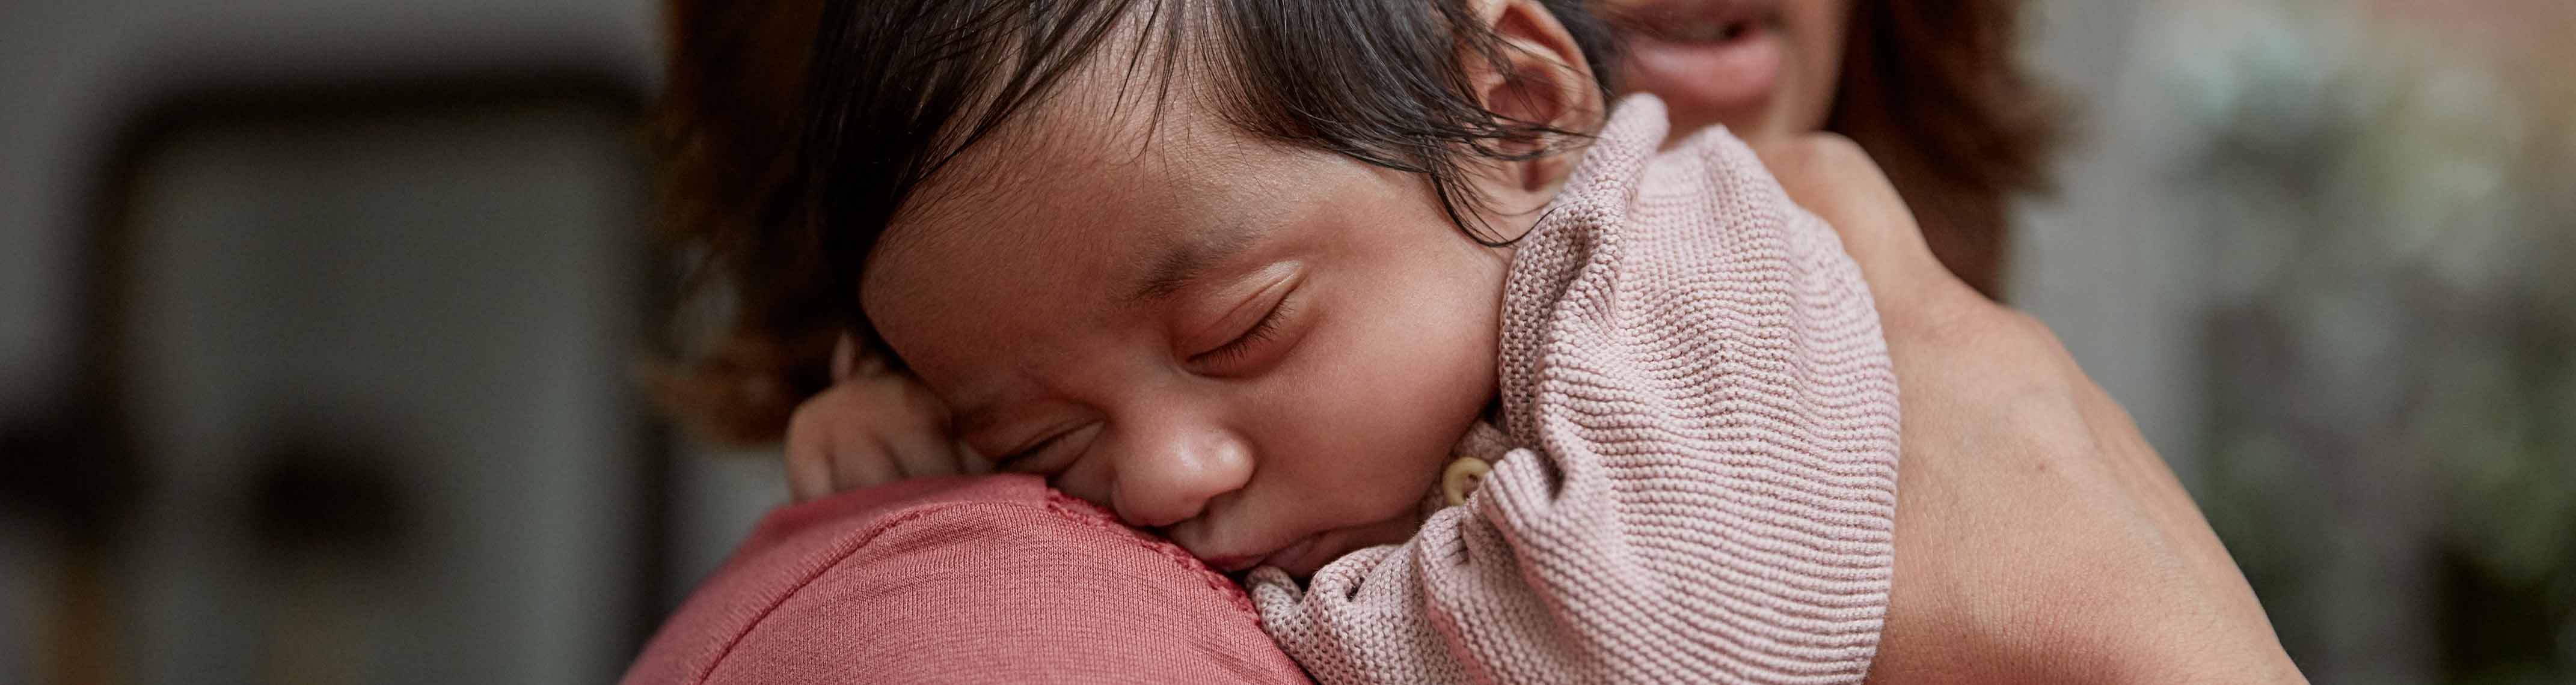 newborn sleeping on parent image